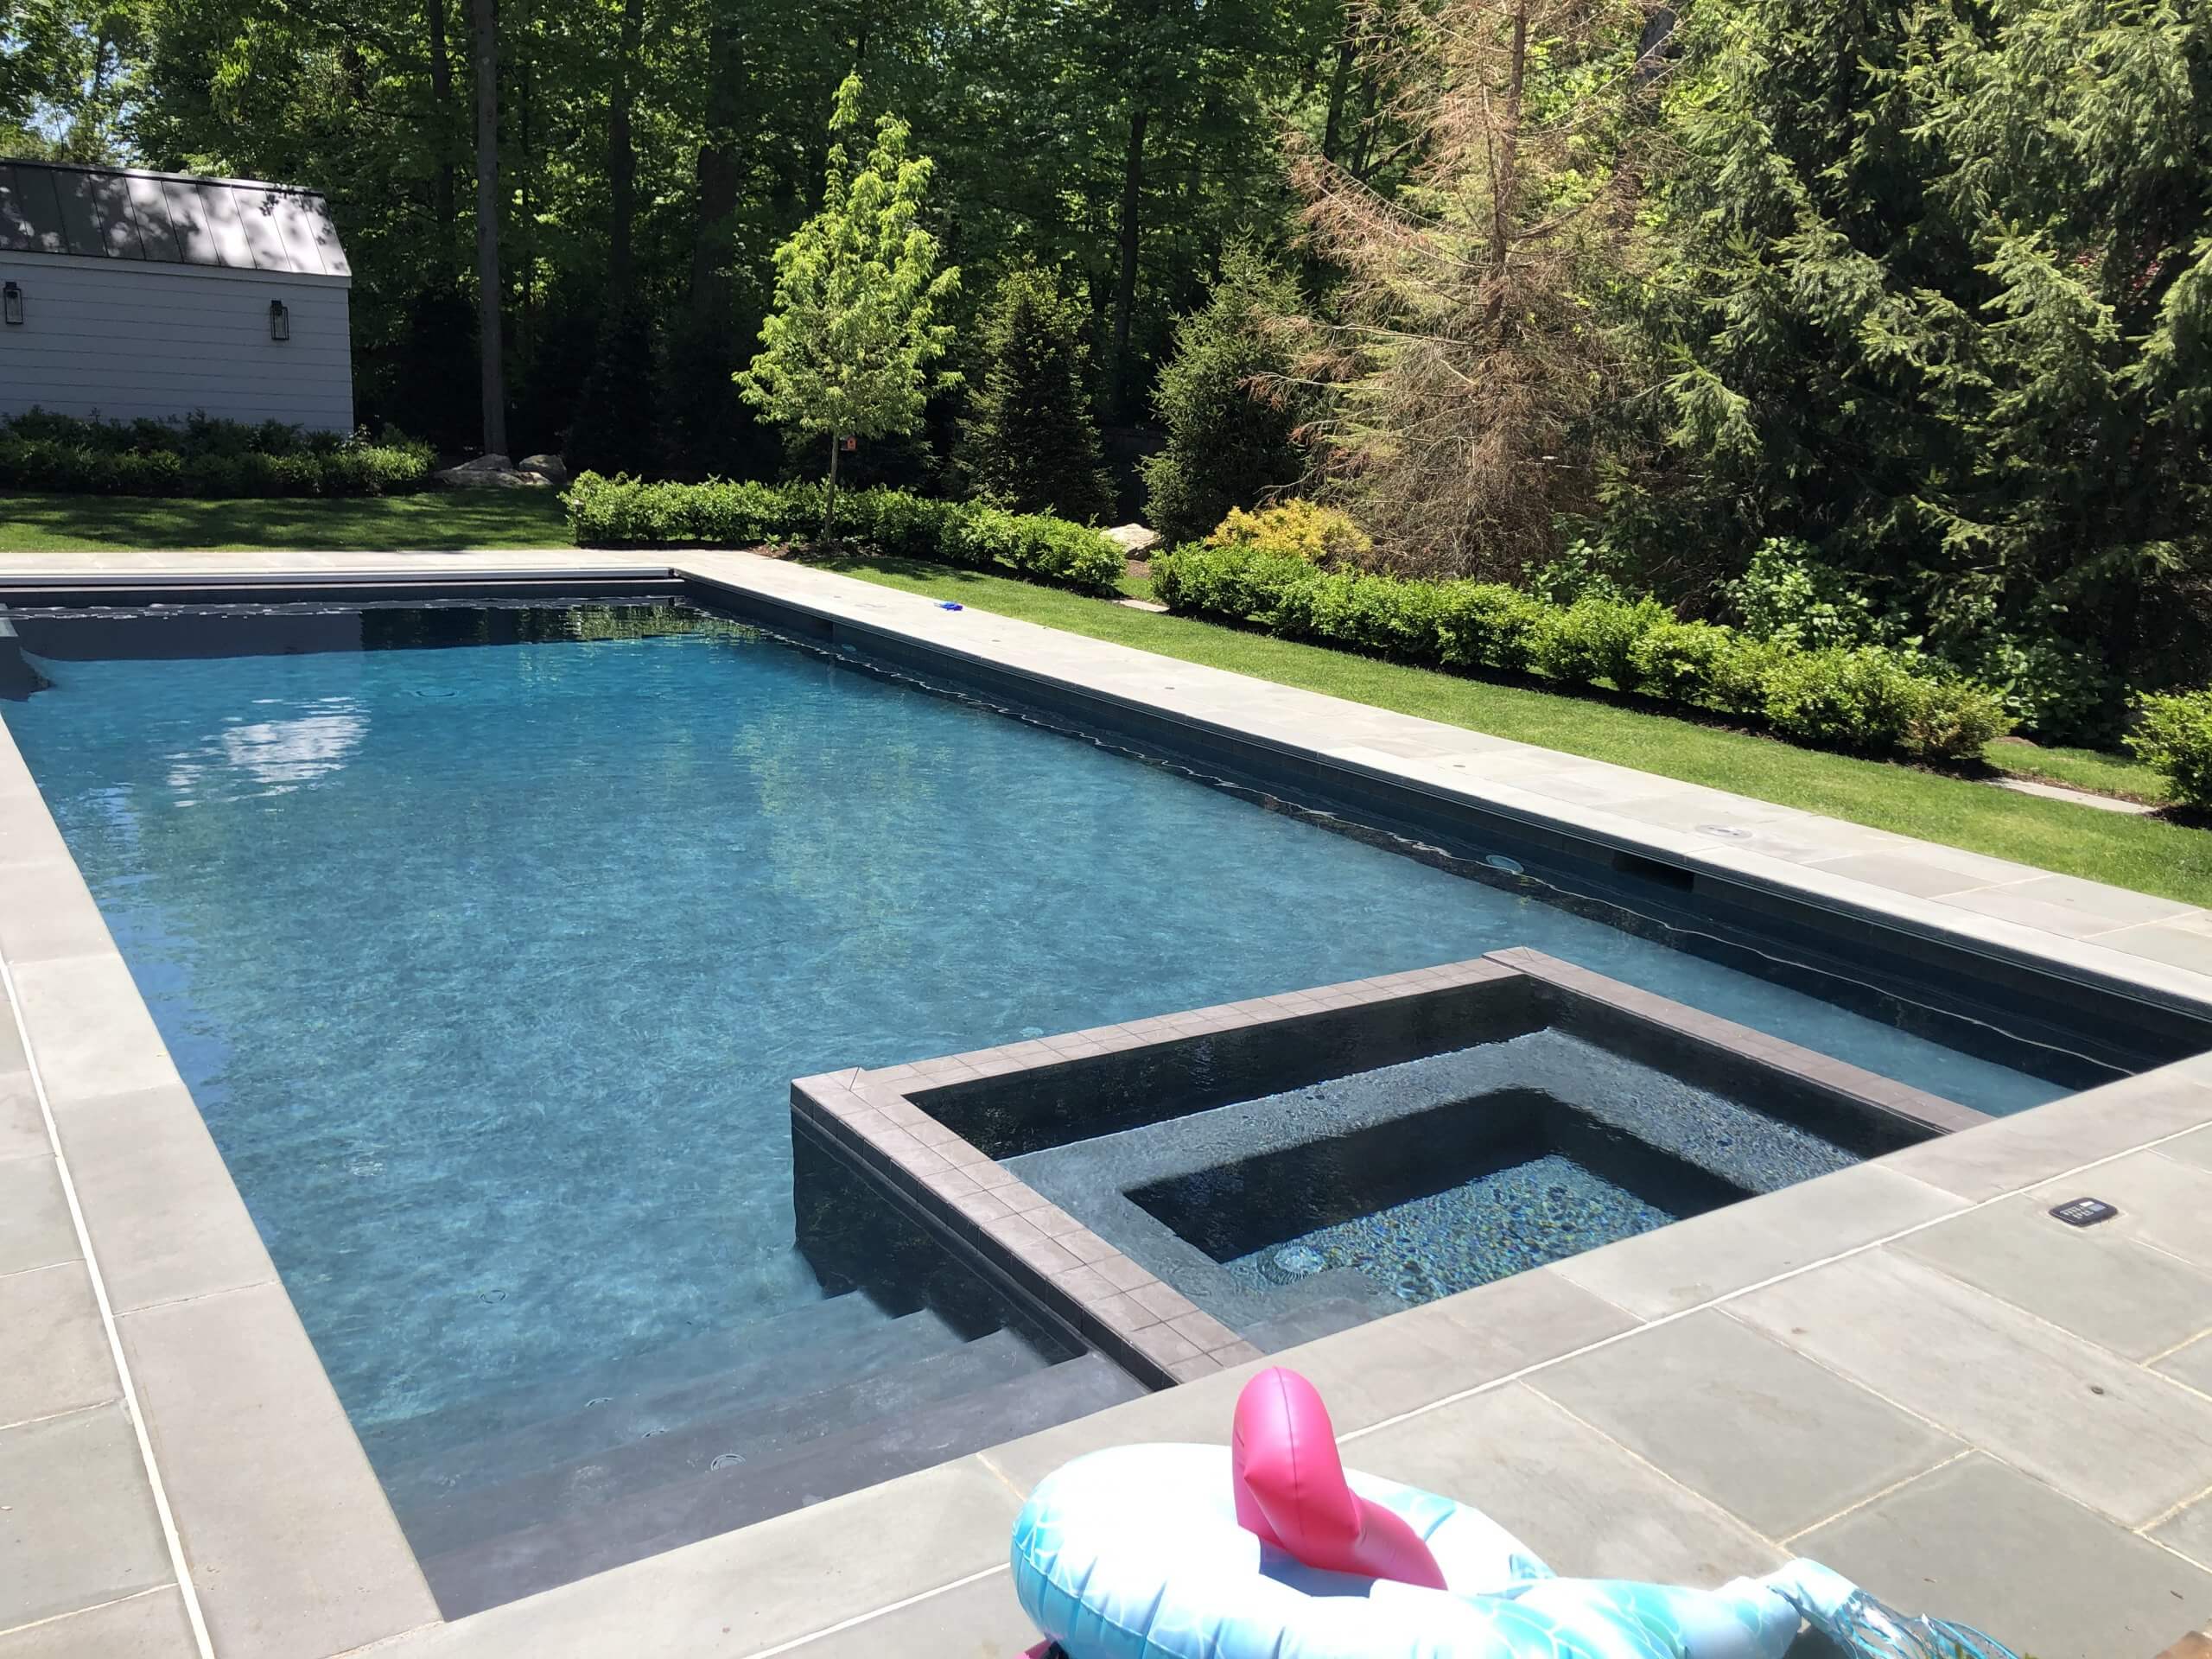 Aqua Pool & Patio gunite swimming pool construction in Connecticut showing geometric pool with hot tub